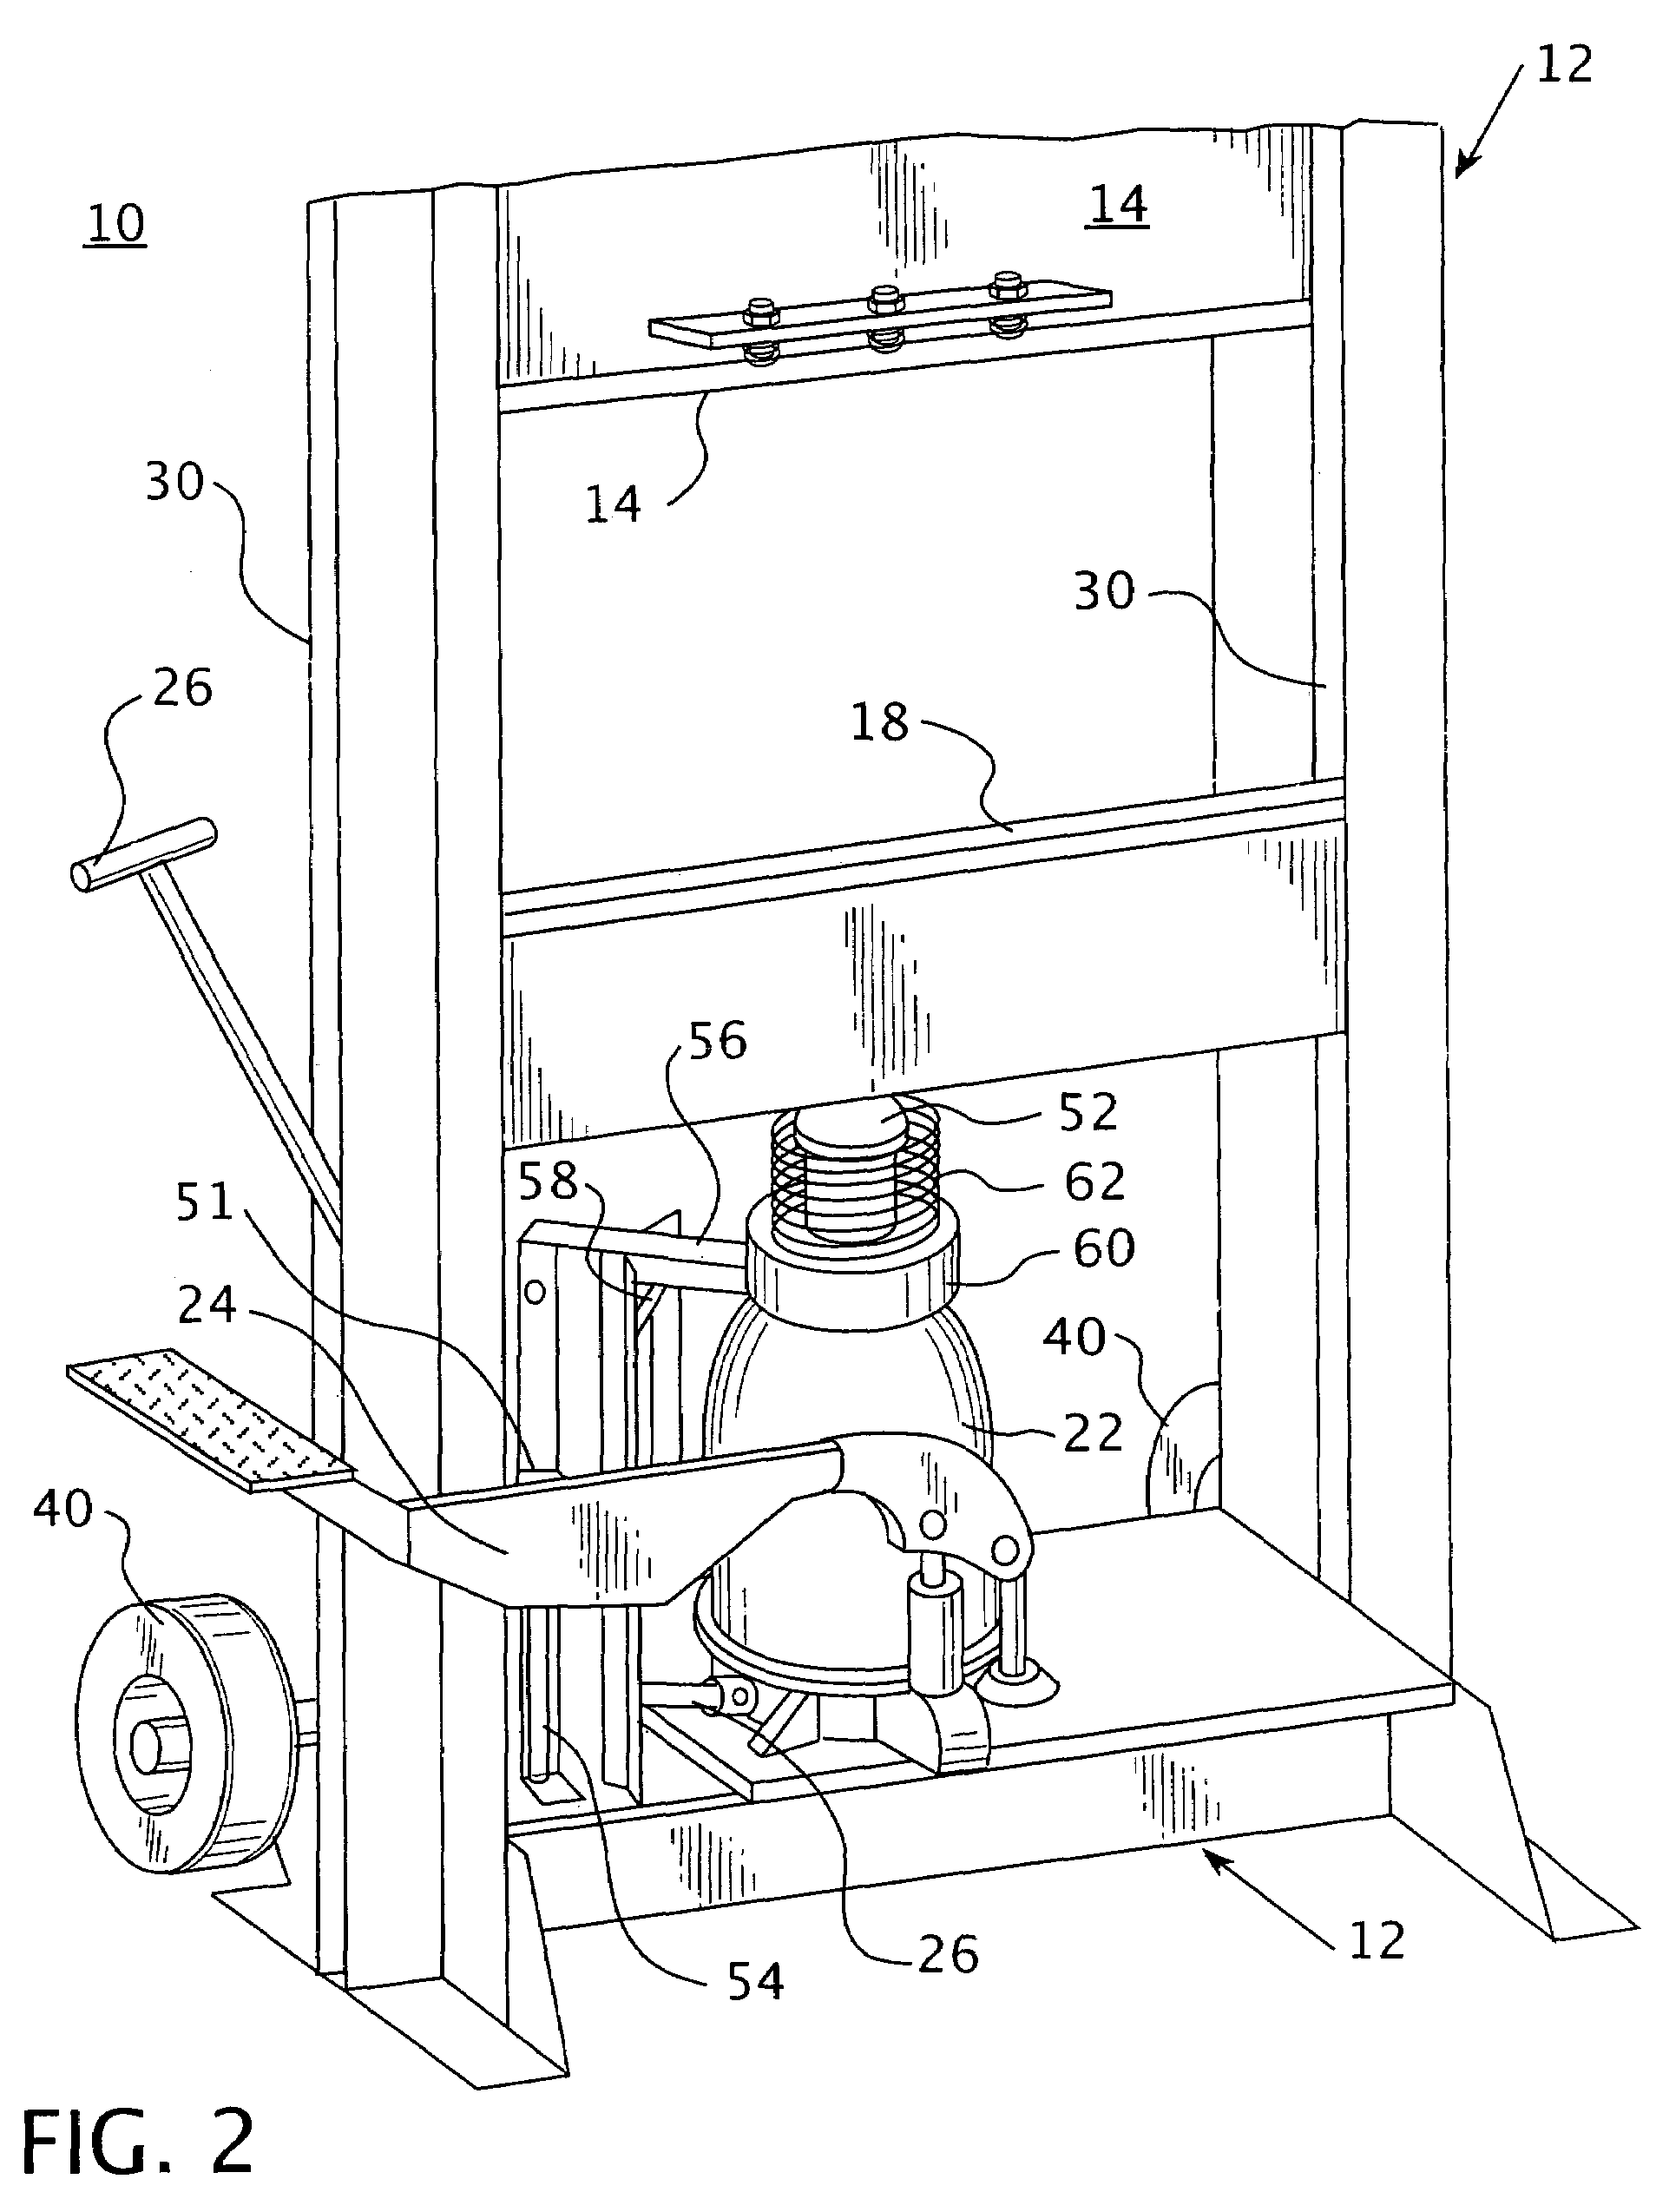 Apparatus and method for splitting masonry materials